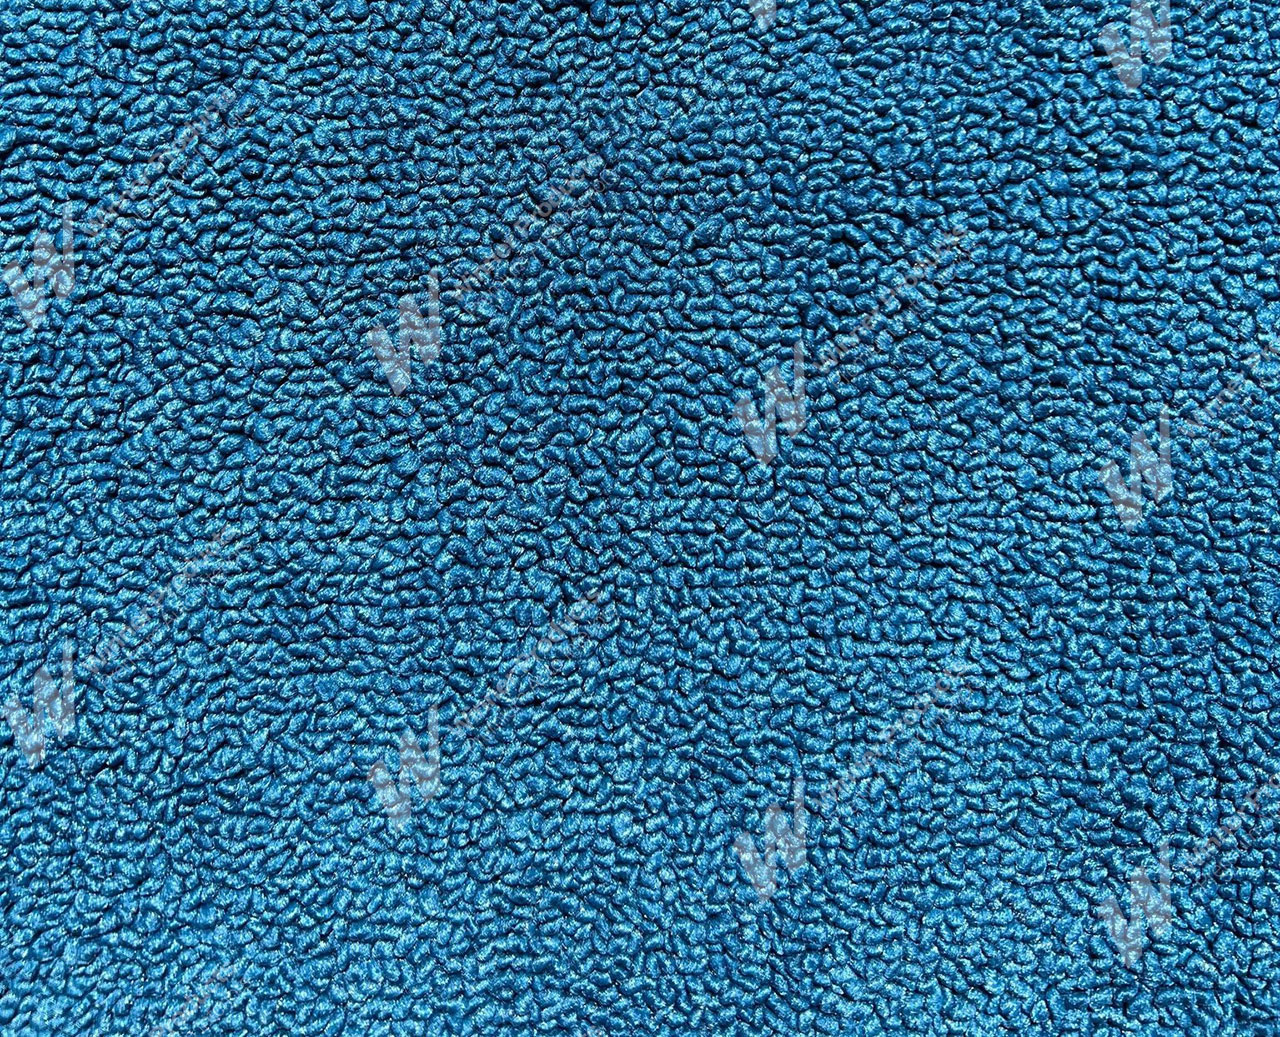 Holden Kingswood HZ Kingswood Sedan 23T Light Blue & Cloth Carpet (Image 1 of 1)